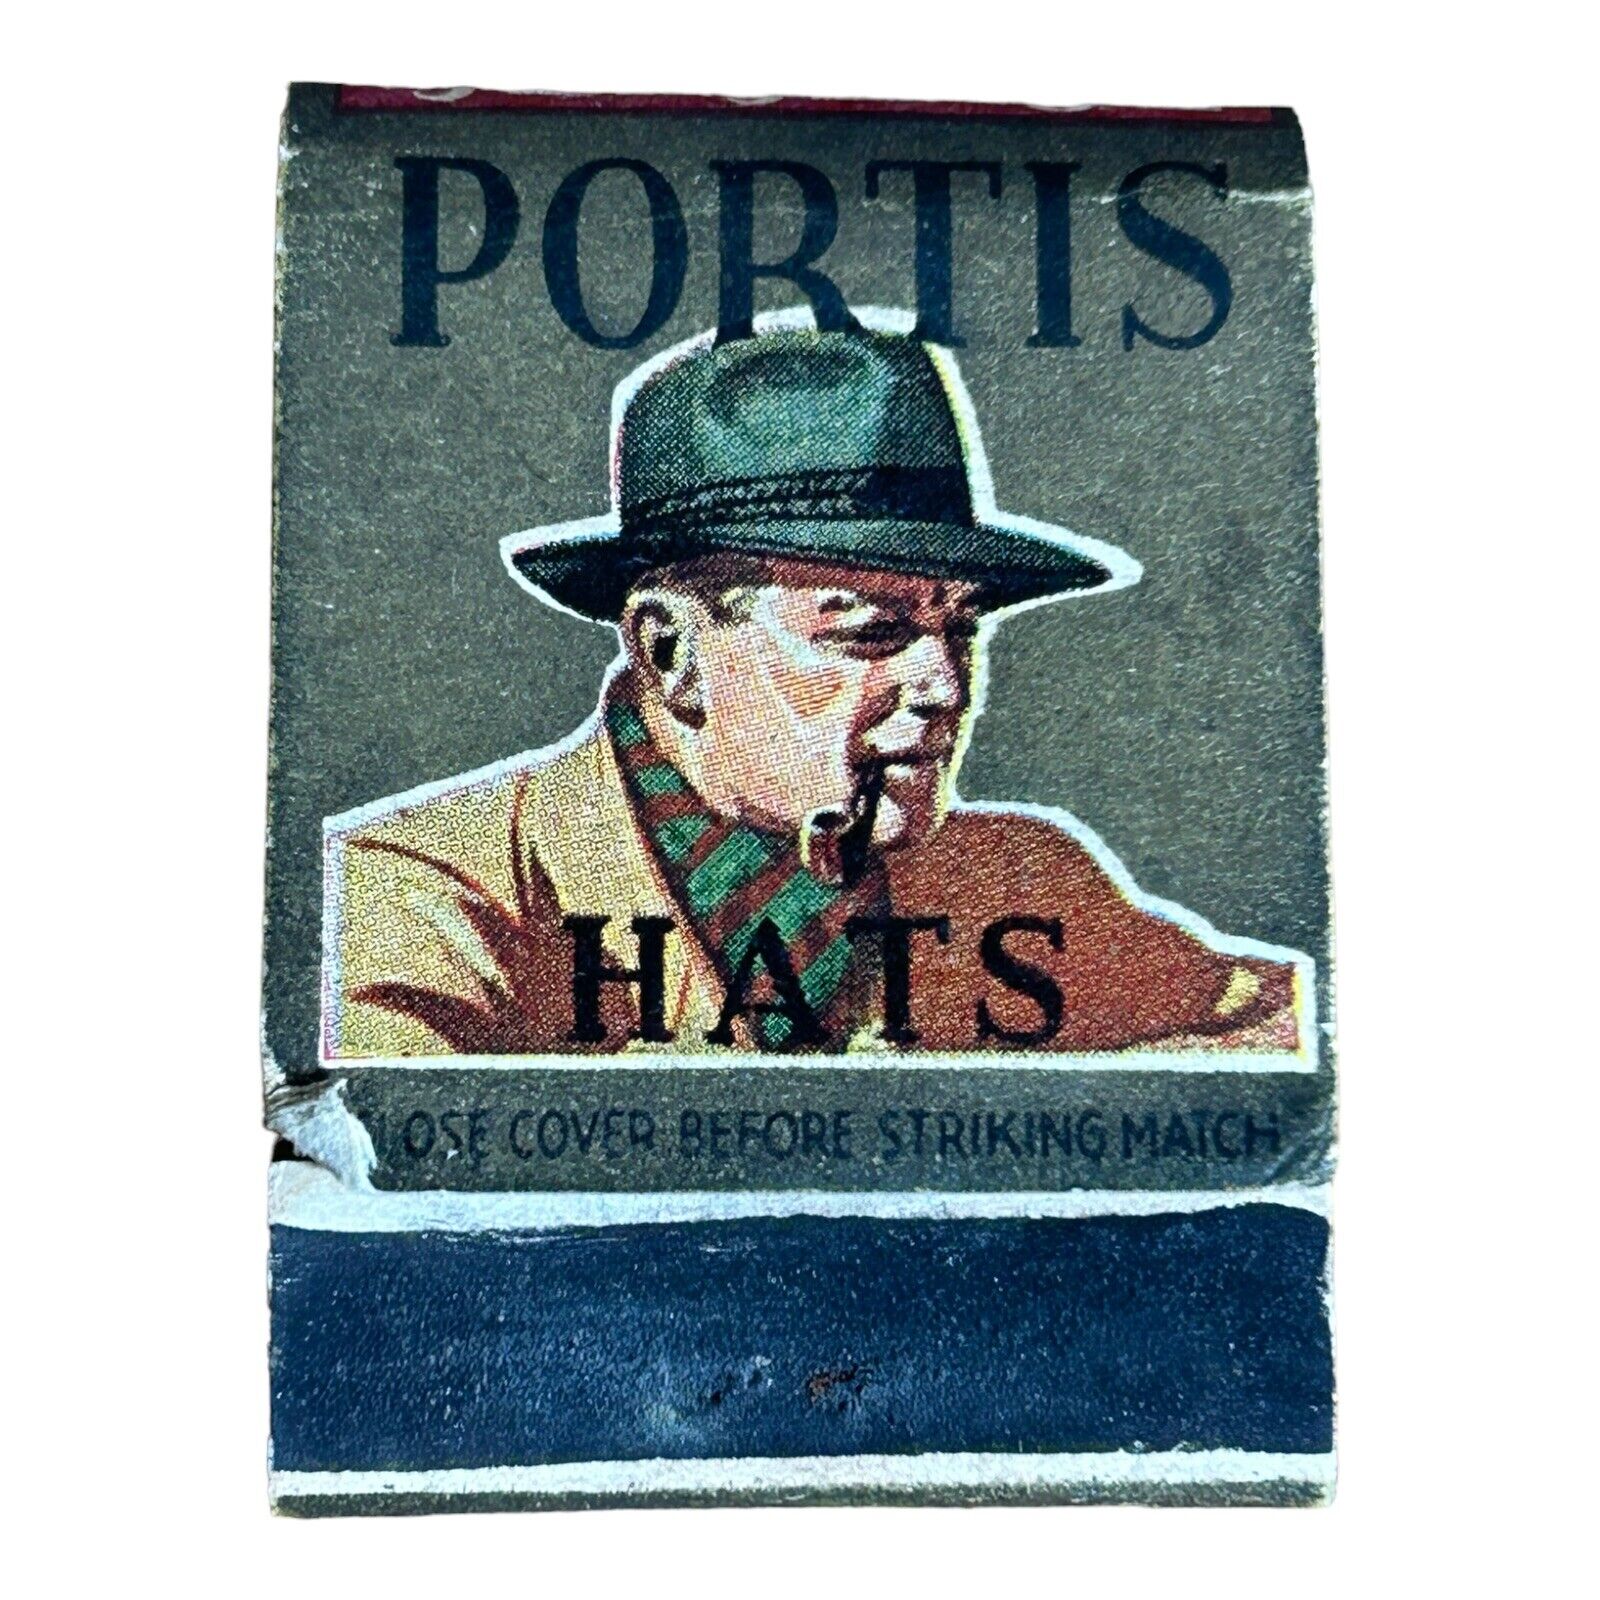 Vintage Striking Matches Portis Hats